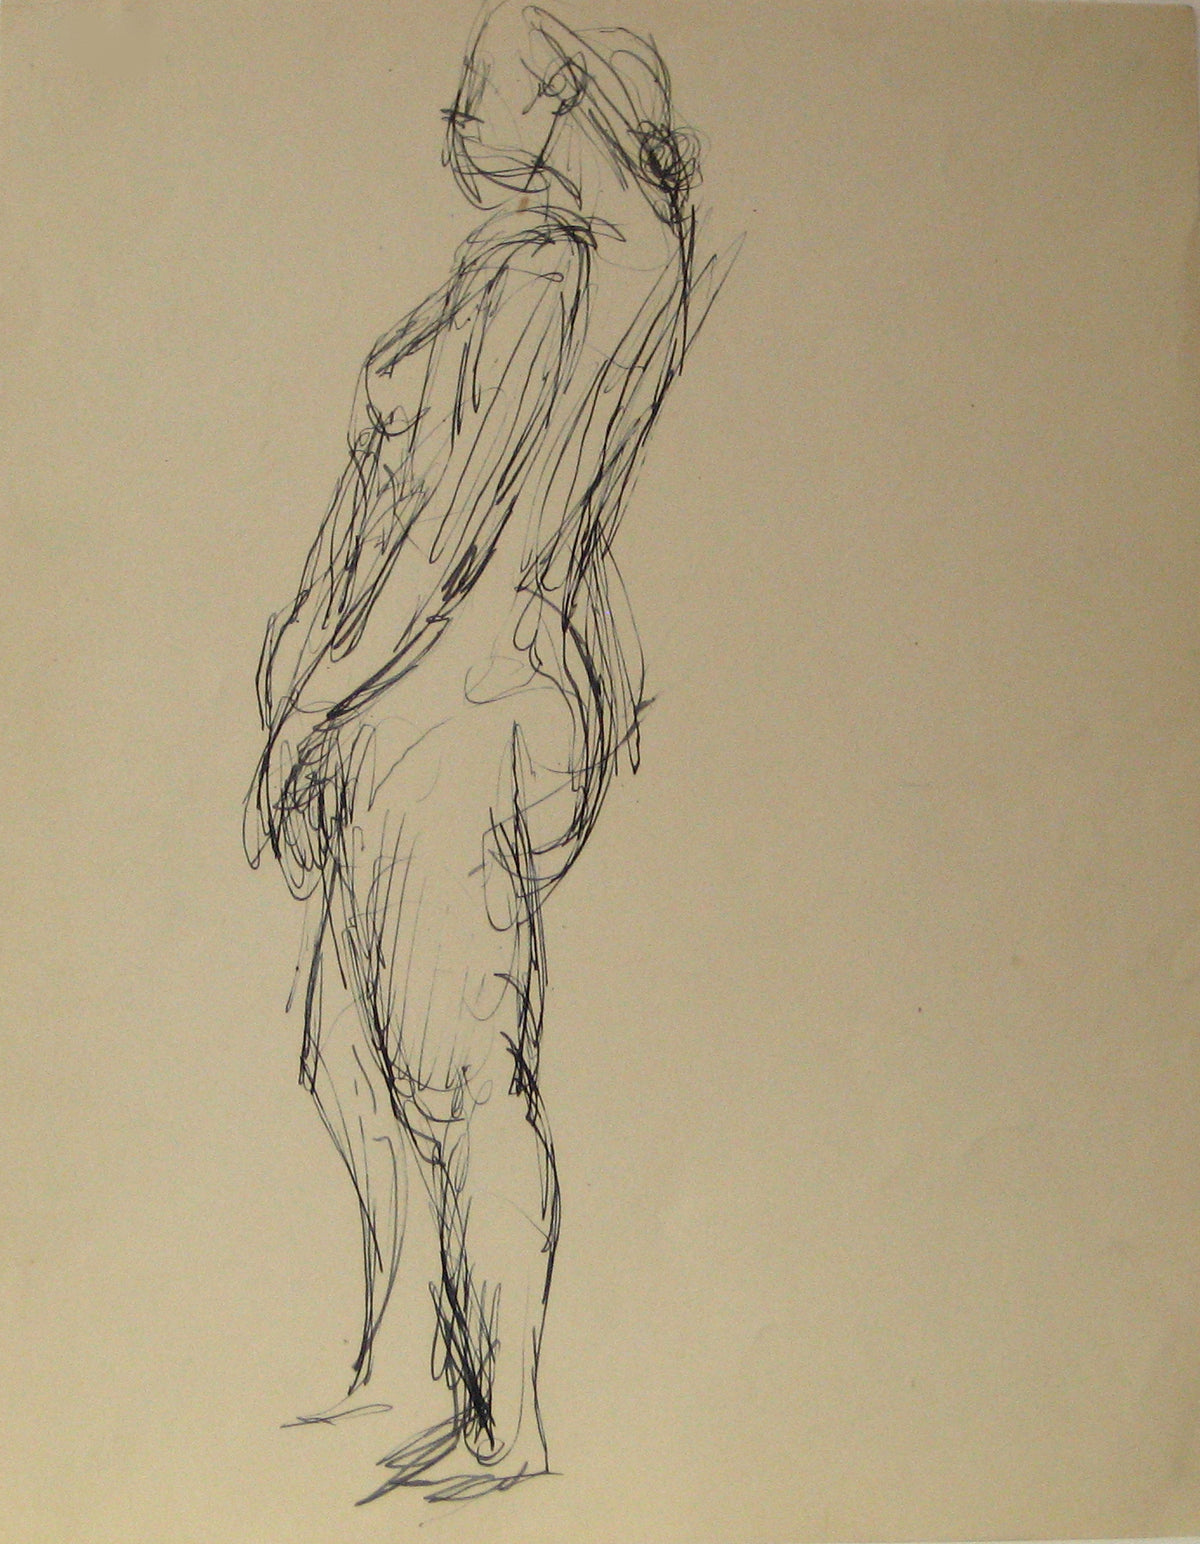 Loose Sketch of Standing Figure &lt;br&gt;Early 20th Century Ink &lt;br&gt;&lt;br&gt;#13118